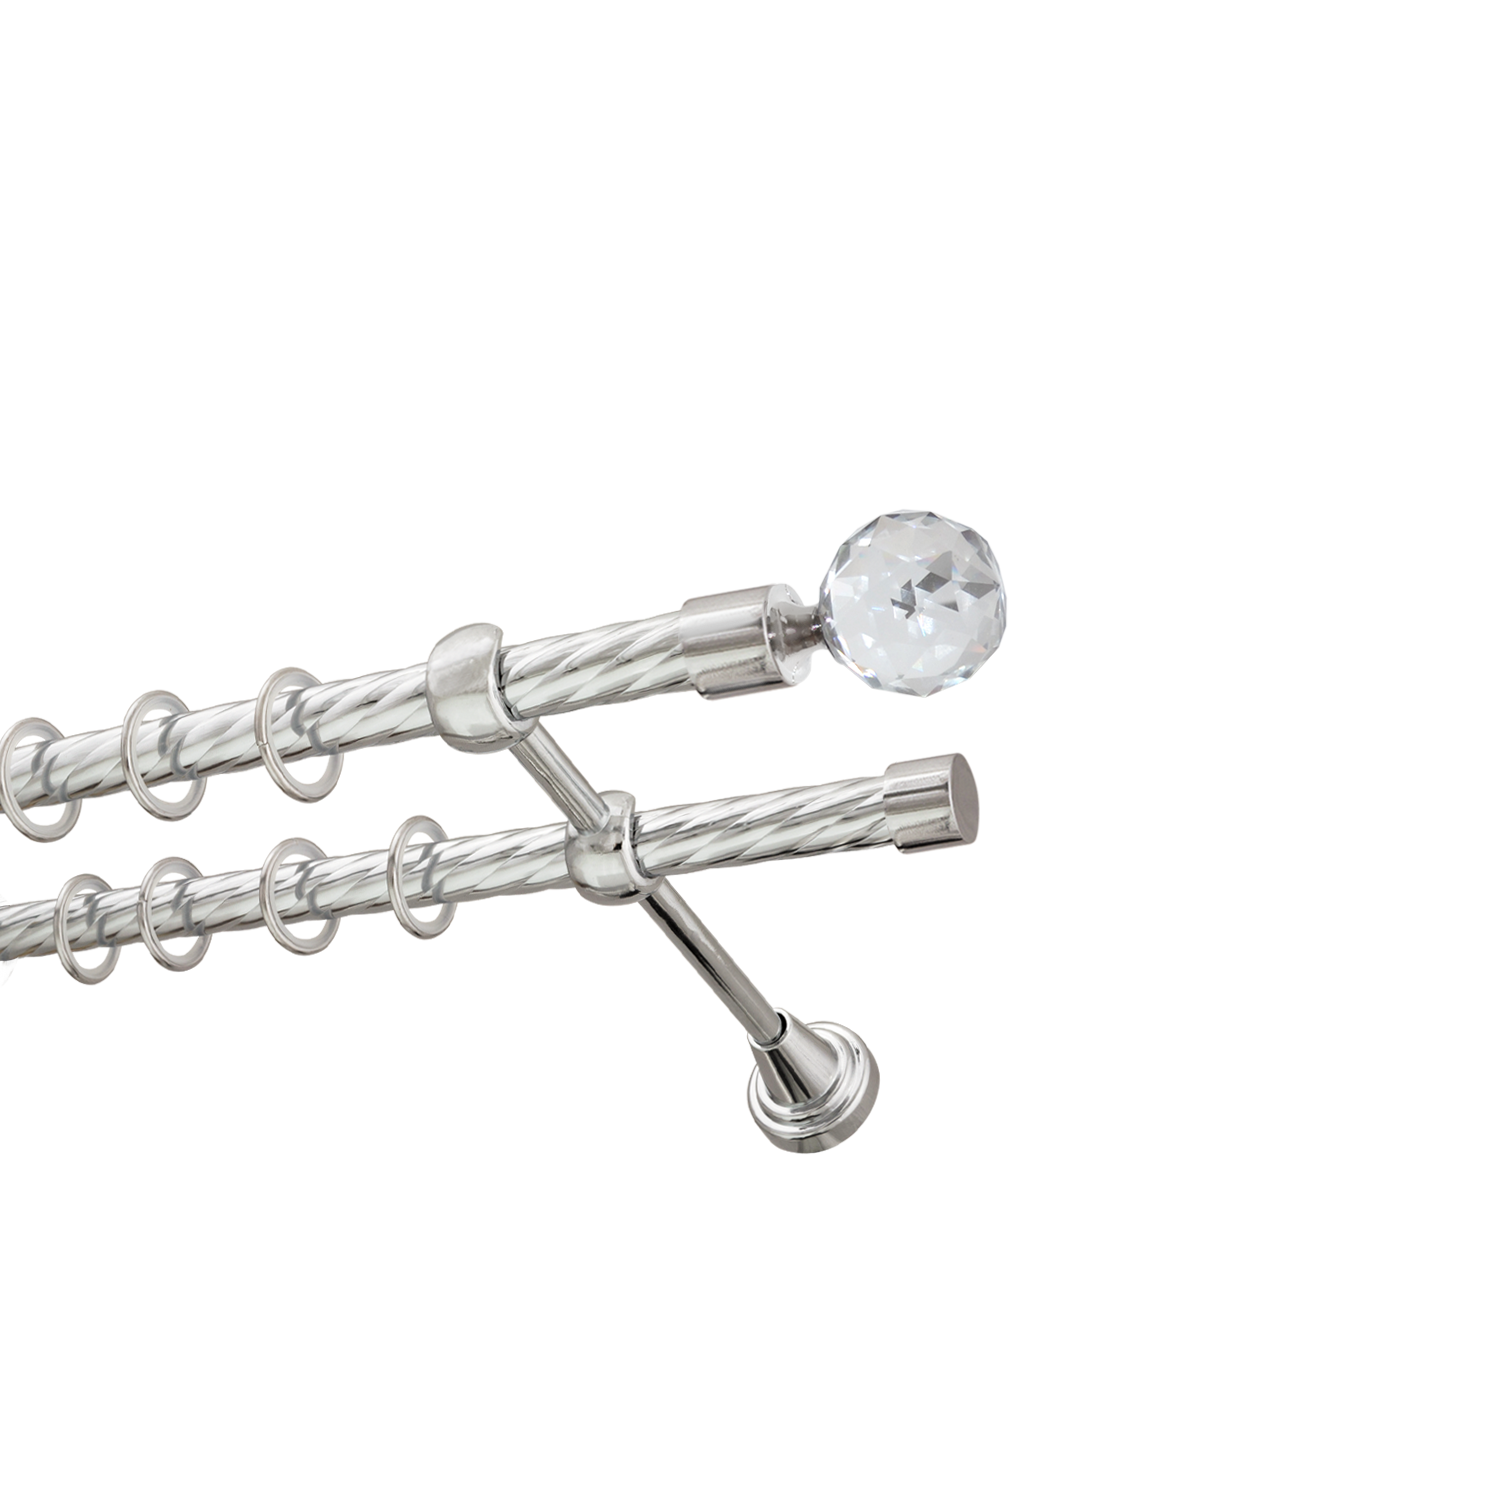 Металлический карниз для штор Карат, двухрядный 16/16 мм, серебро, витая штанга, длина 160 см - фото Wikidecor.ru